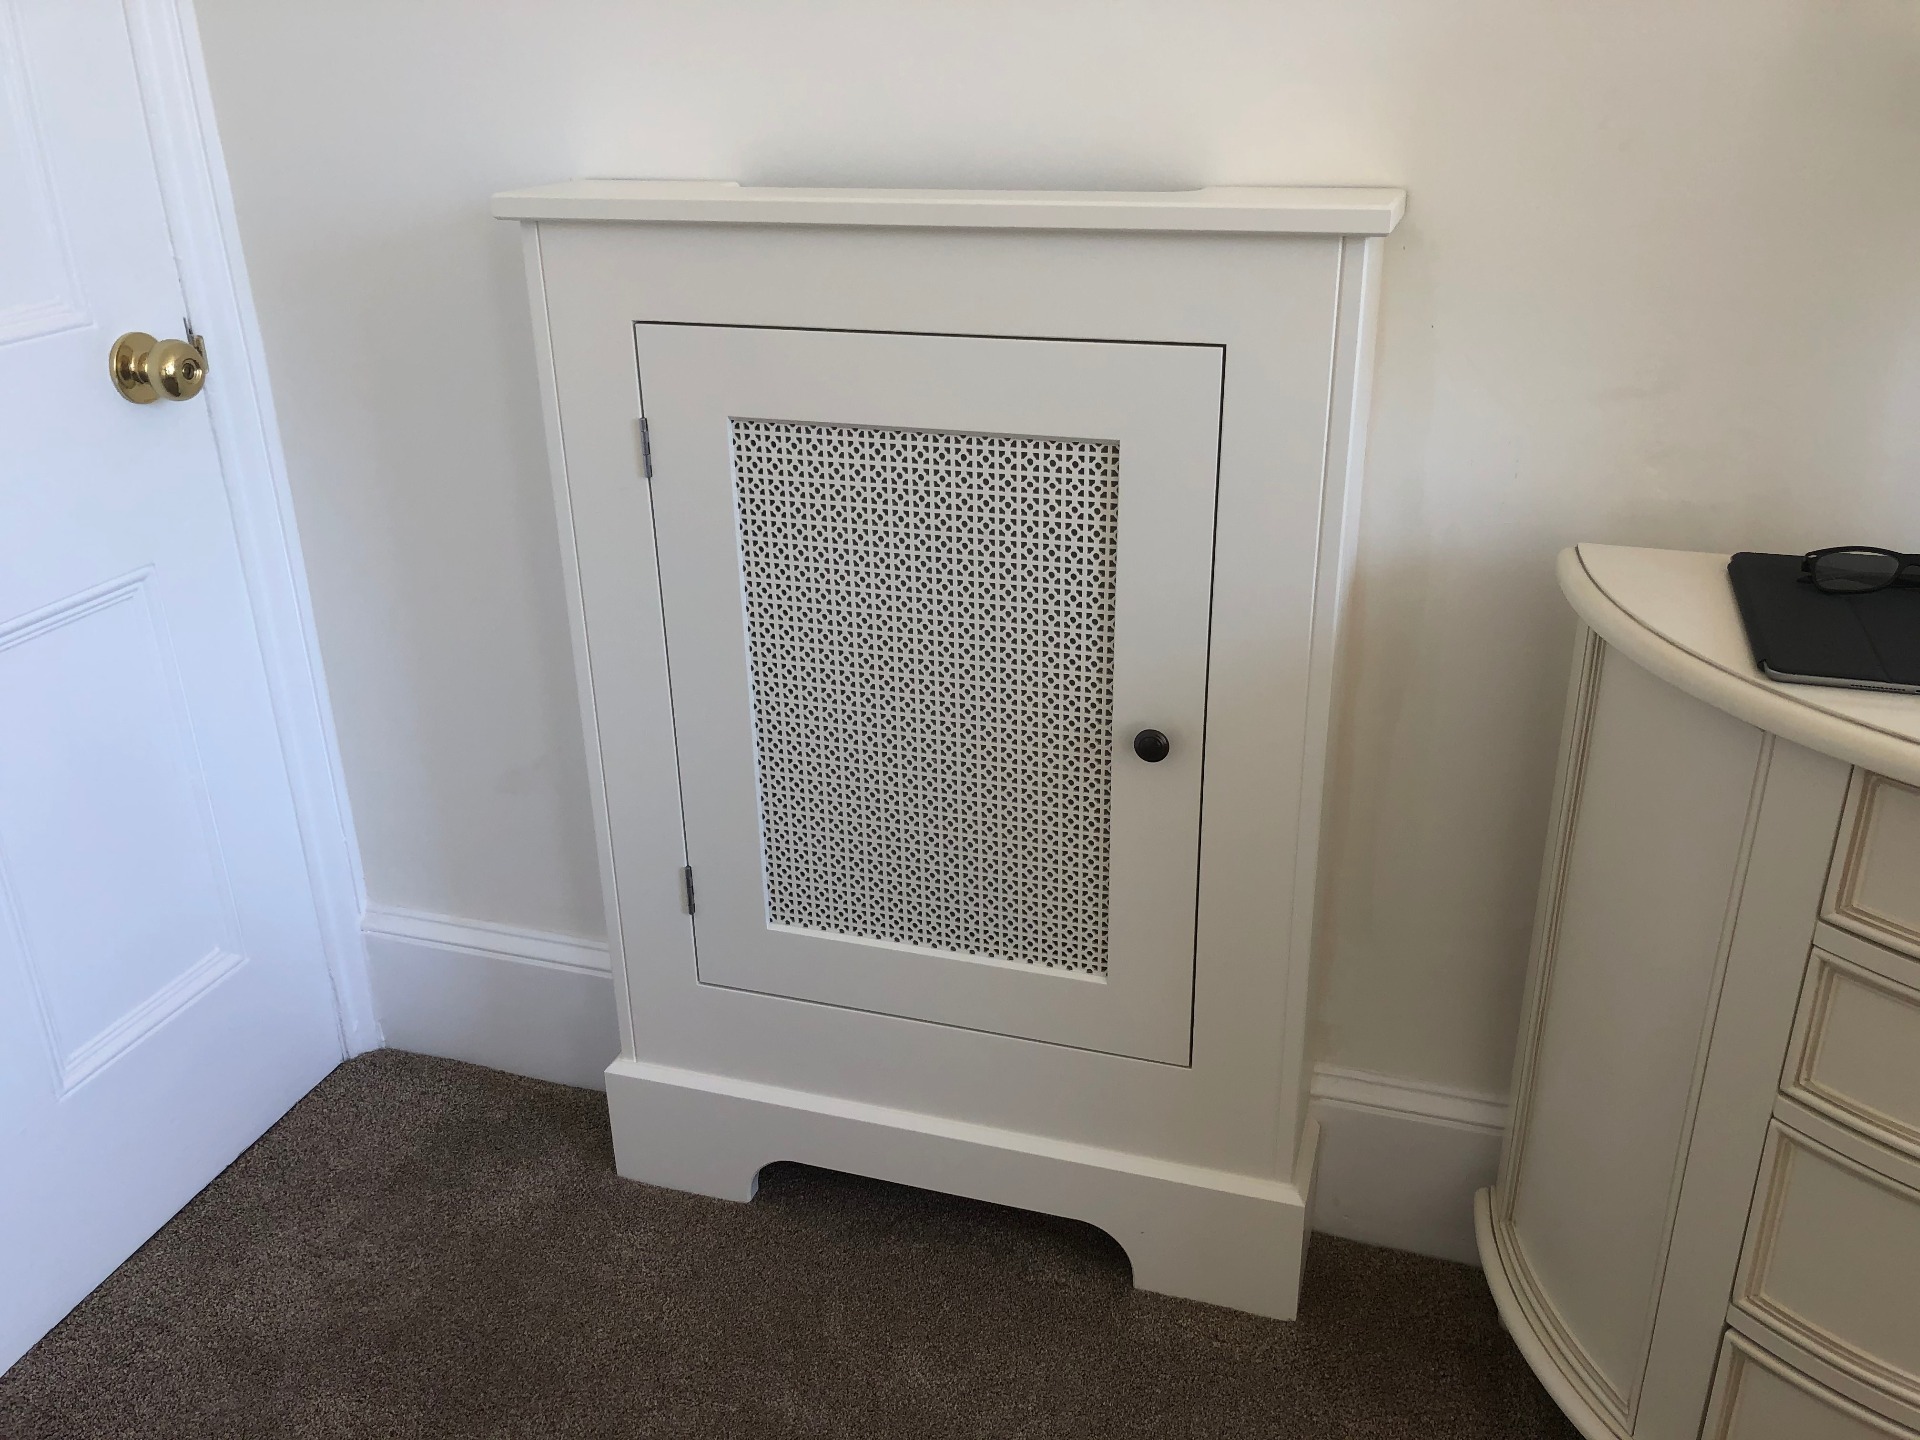 Small in-frame radiator cover